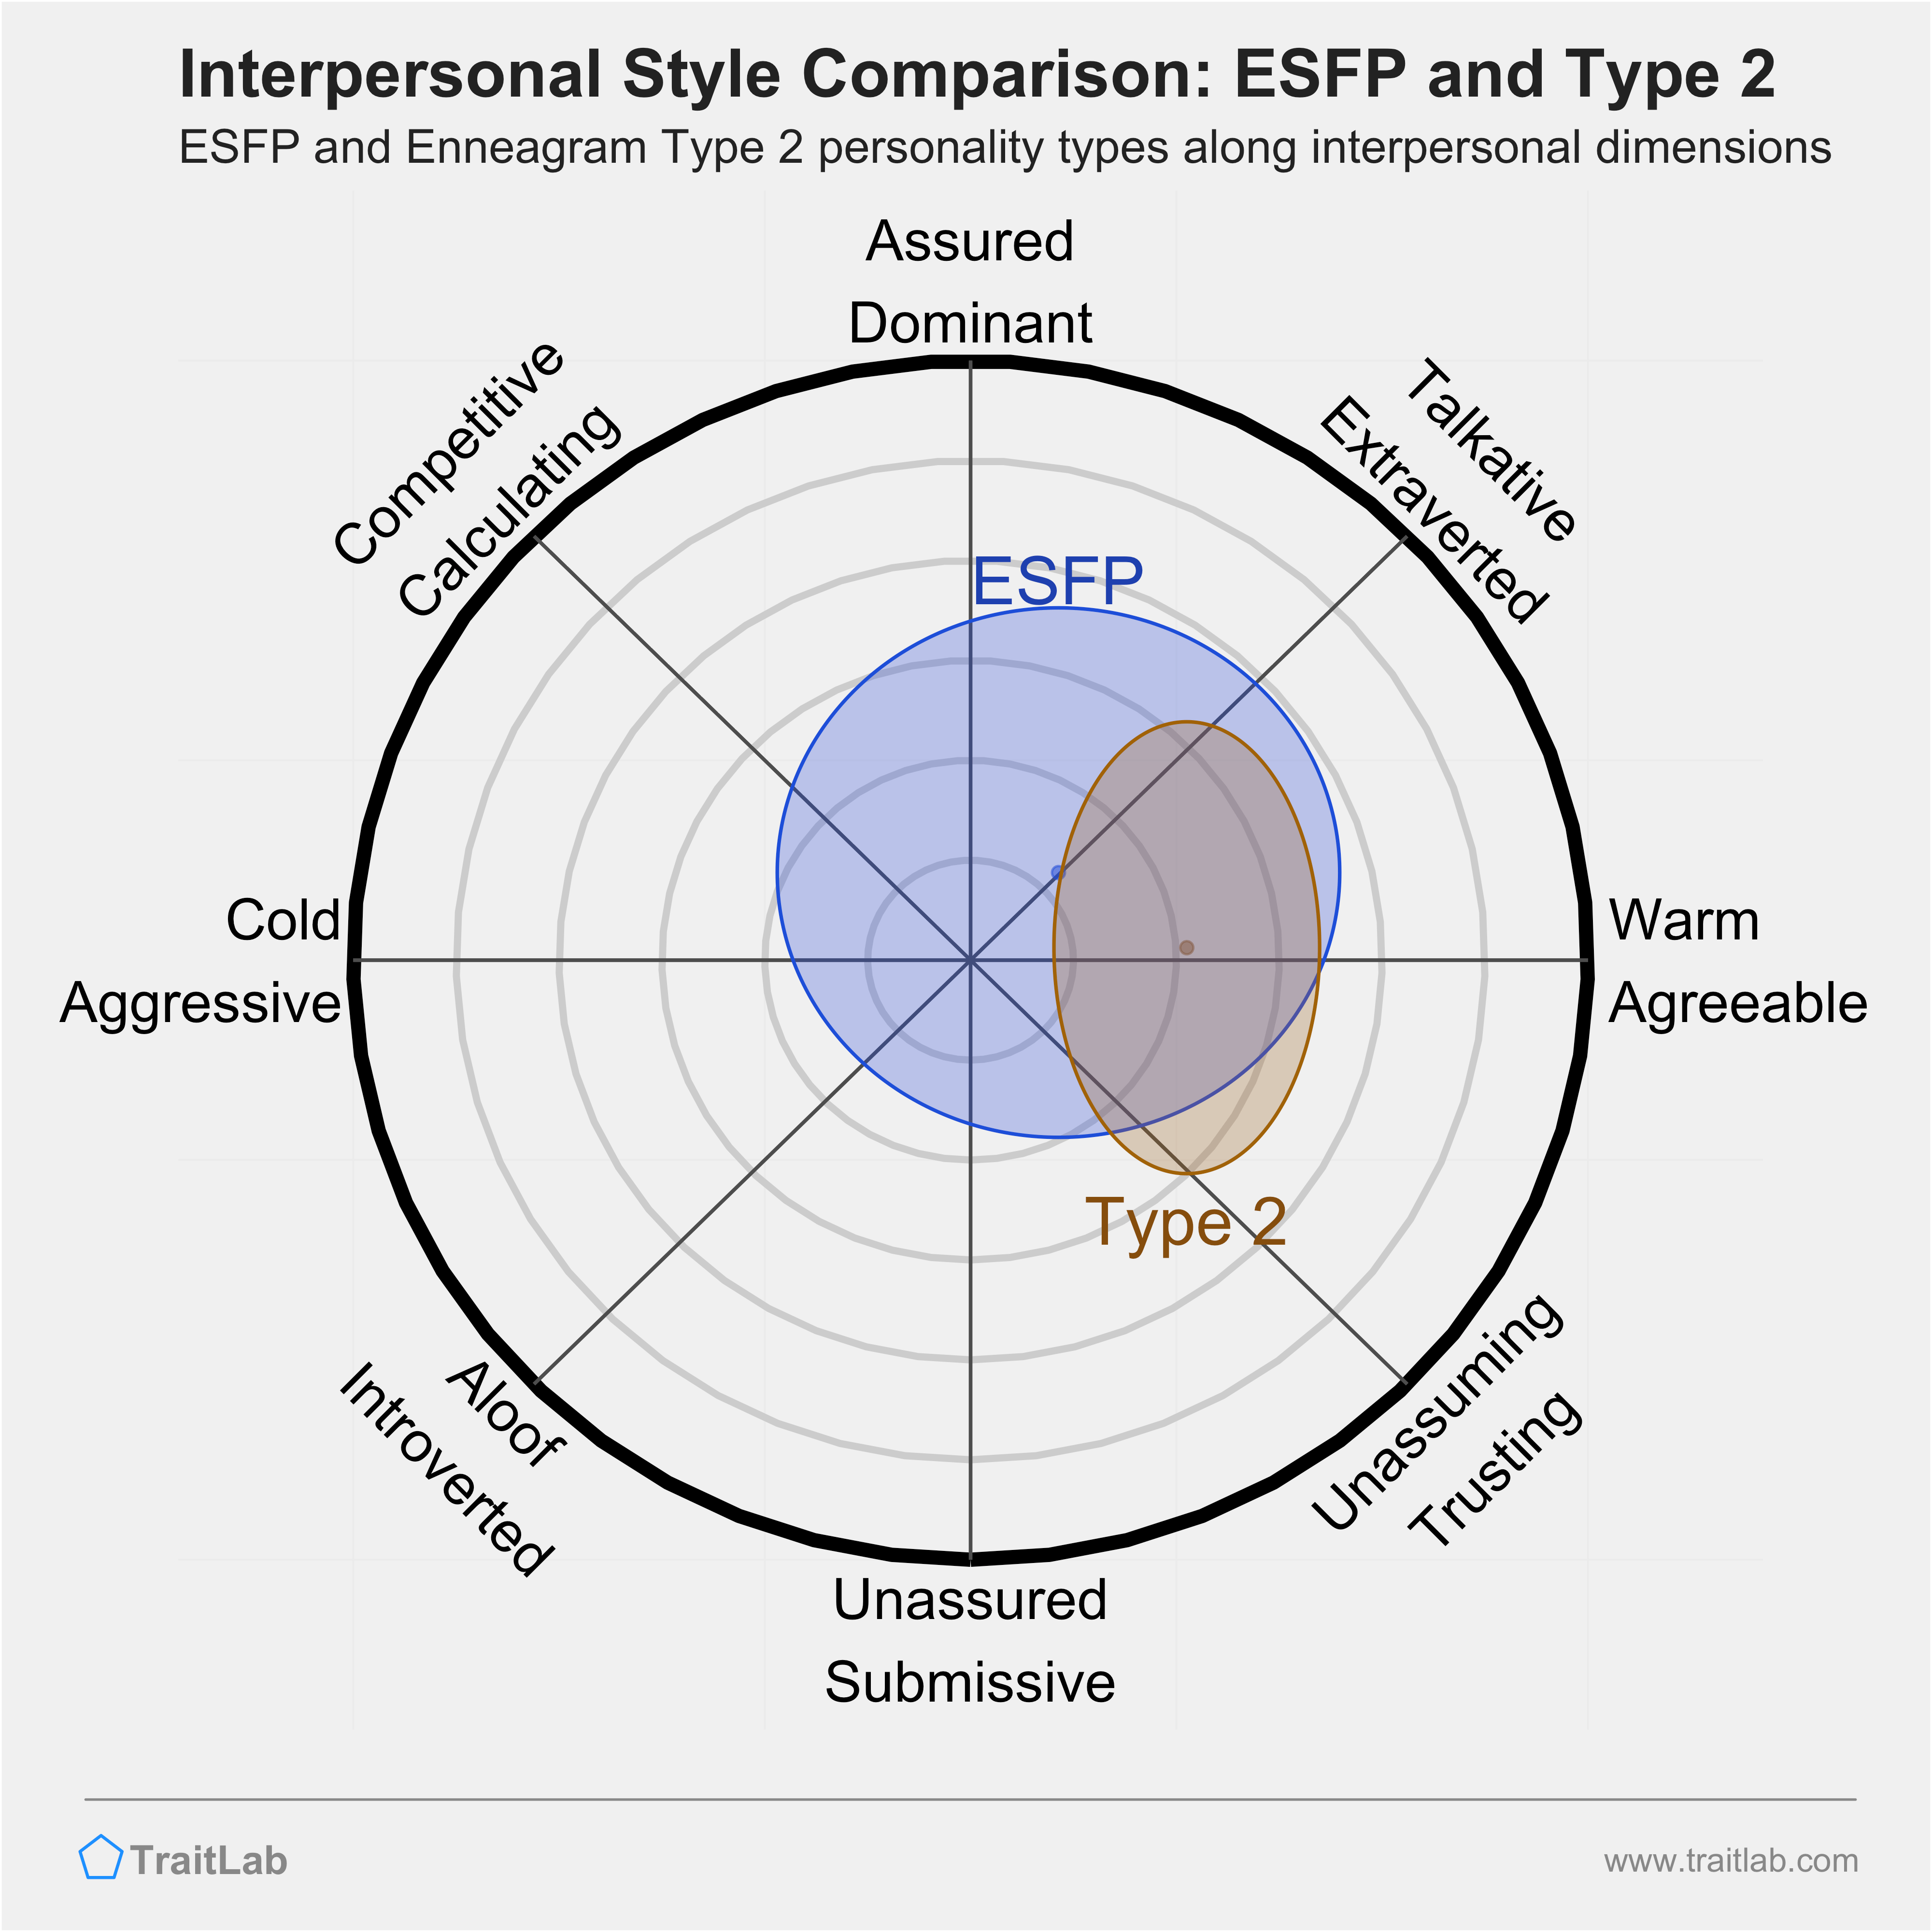 Enneagram ESFP and Type 2 comparison across interpersonal dimensions